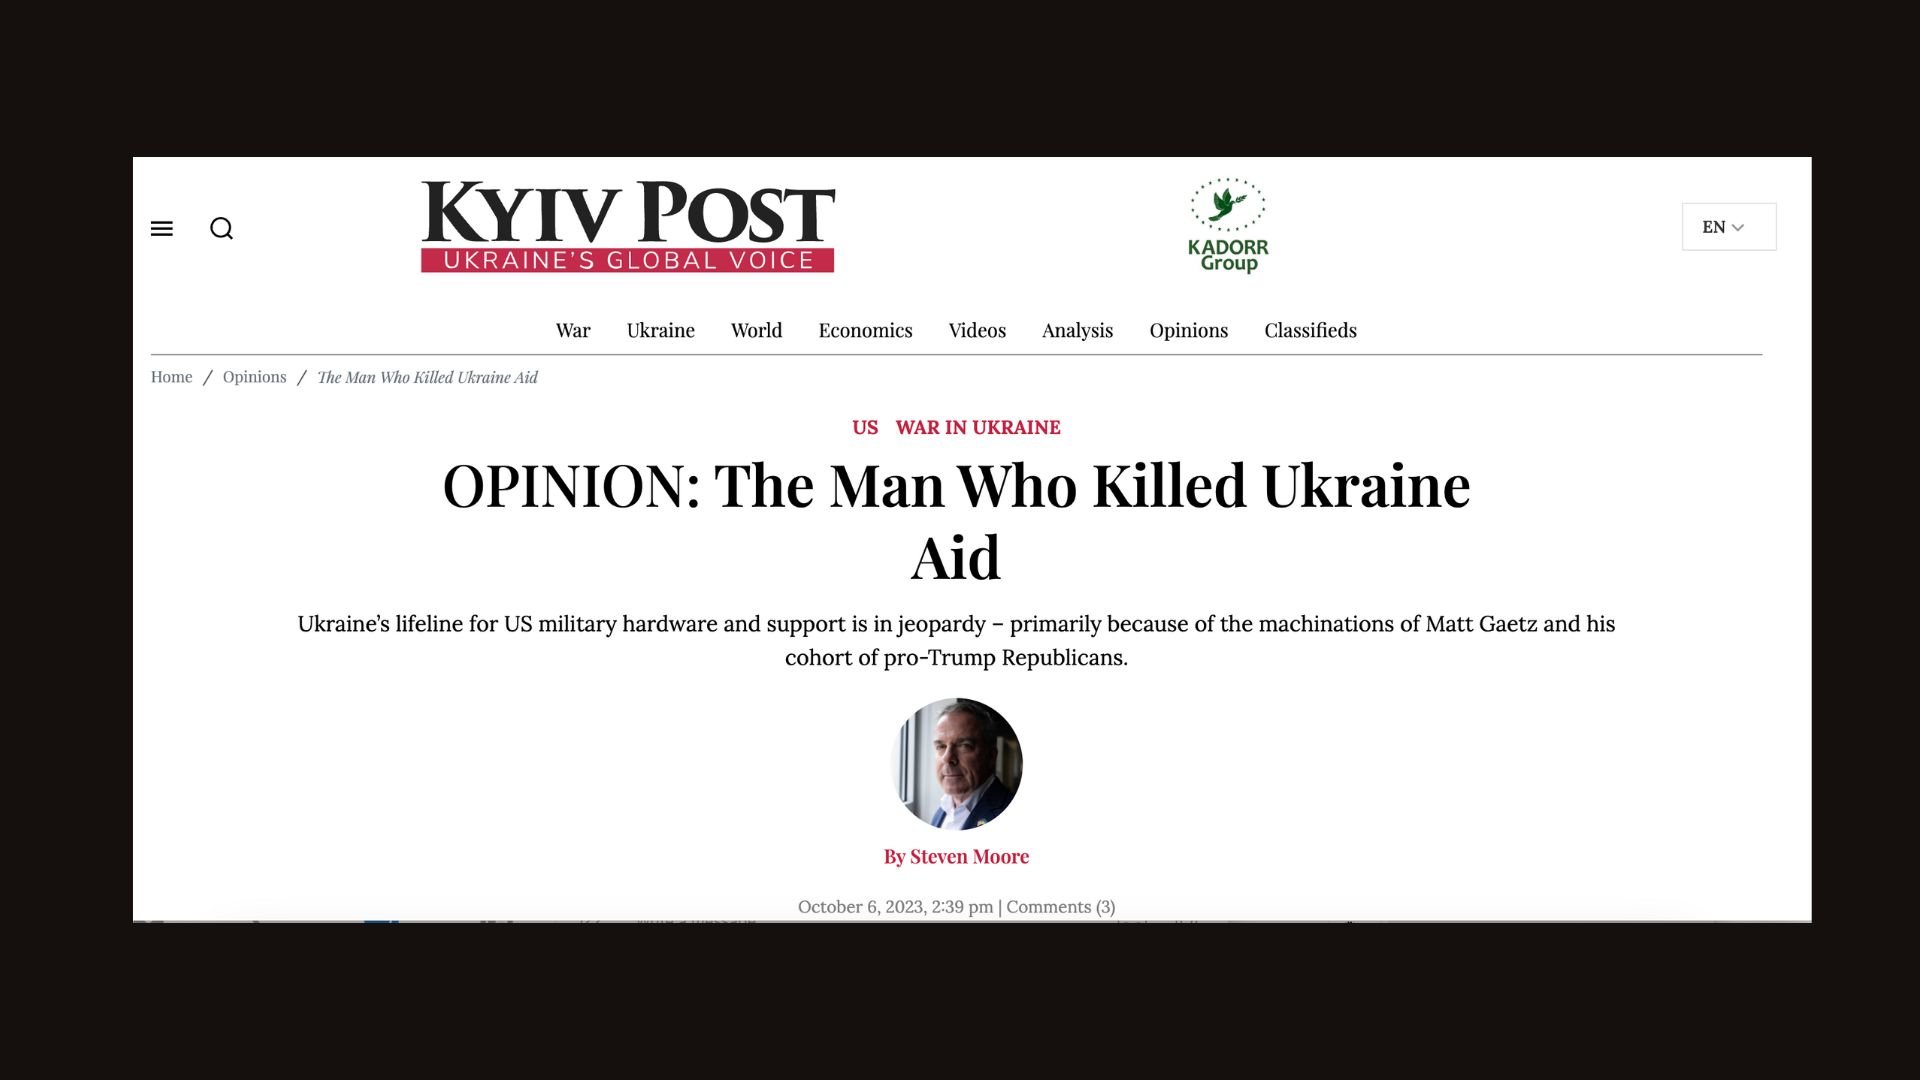 OPINION: The Man Who Killed Ukraine Aid